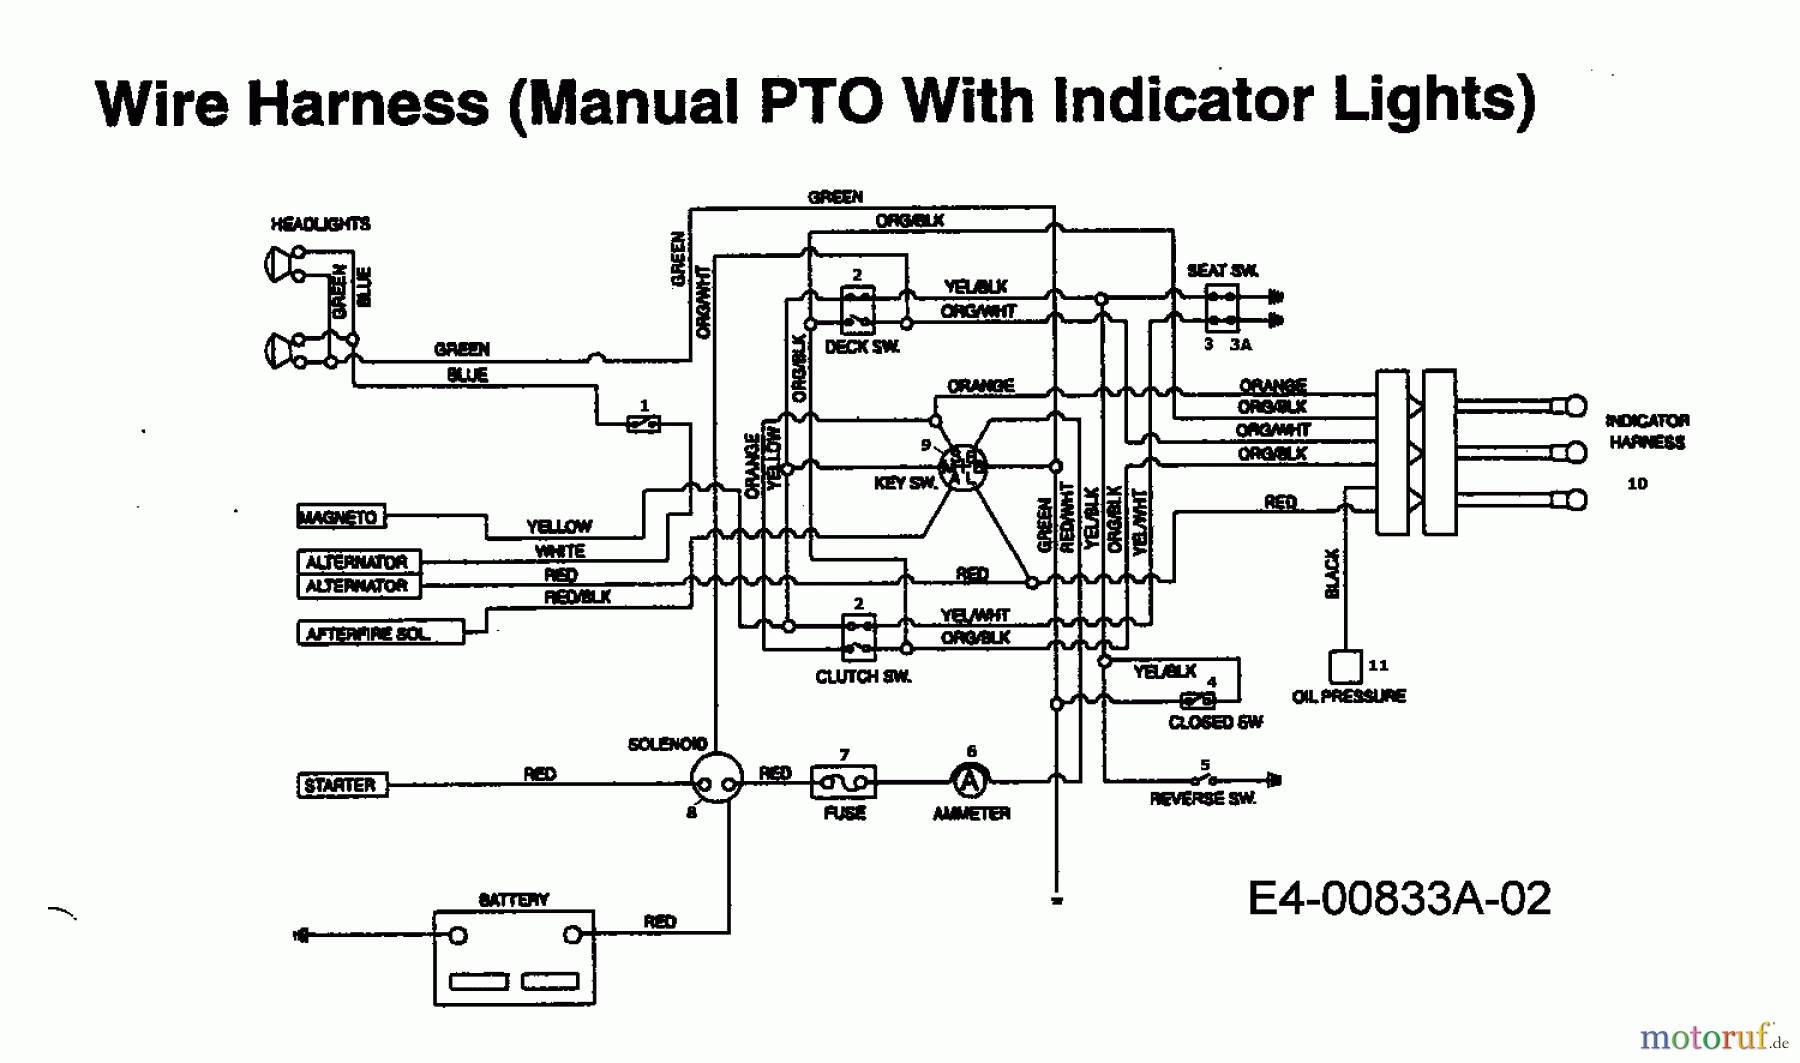  Mastercut Lawn tractors 145/102 H 13AP792N659  (1999) Wiring diagram with indicator lights